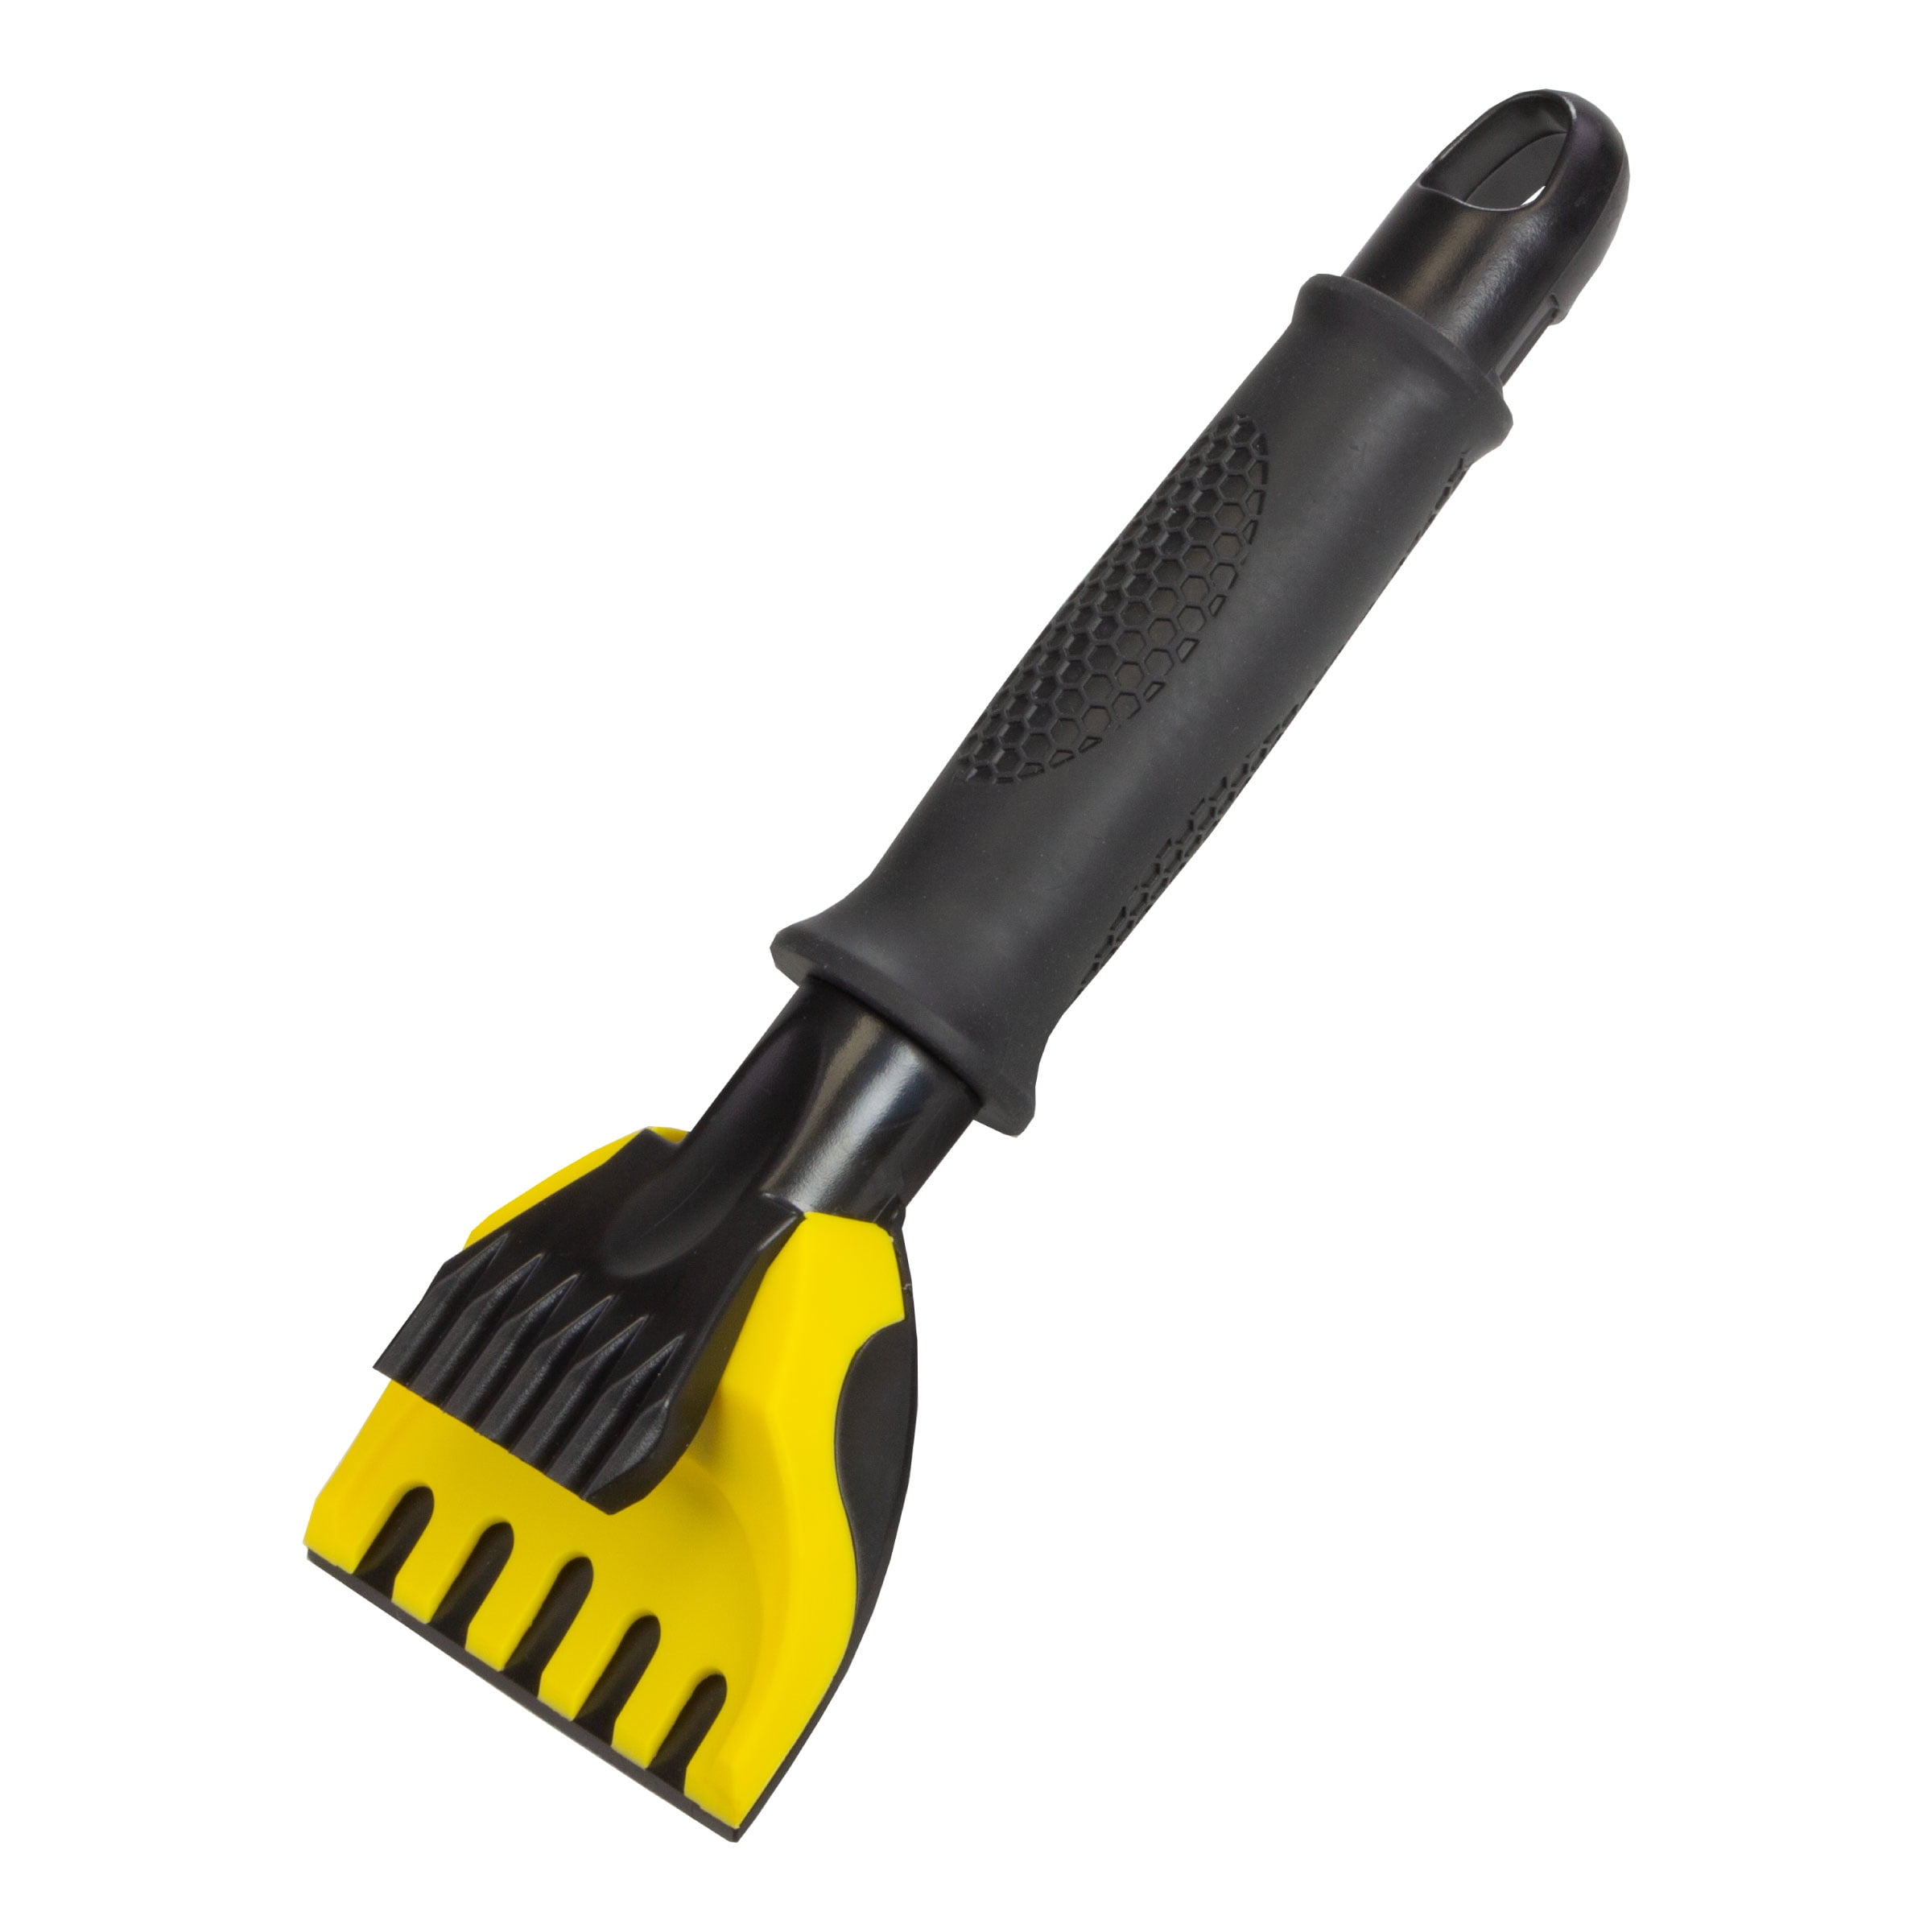 Rain-X 26 Ergo Car Snow Brush with Ice Scraper Tool, Black and Yellow,  Size 26, 1 Pack, 1220185025X 